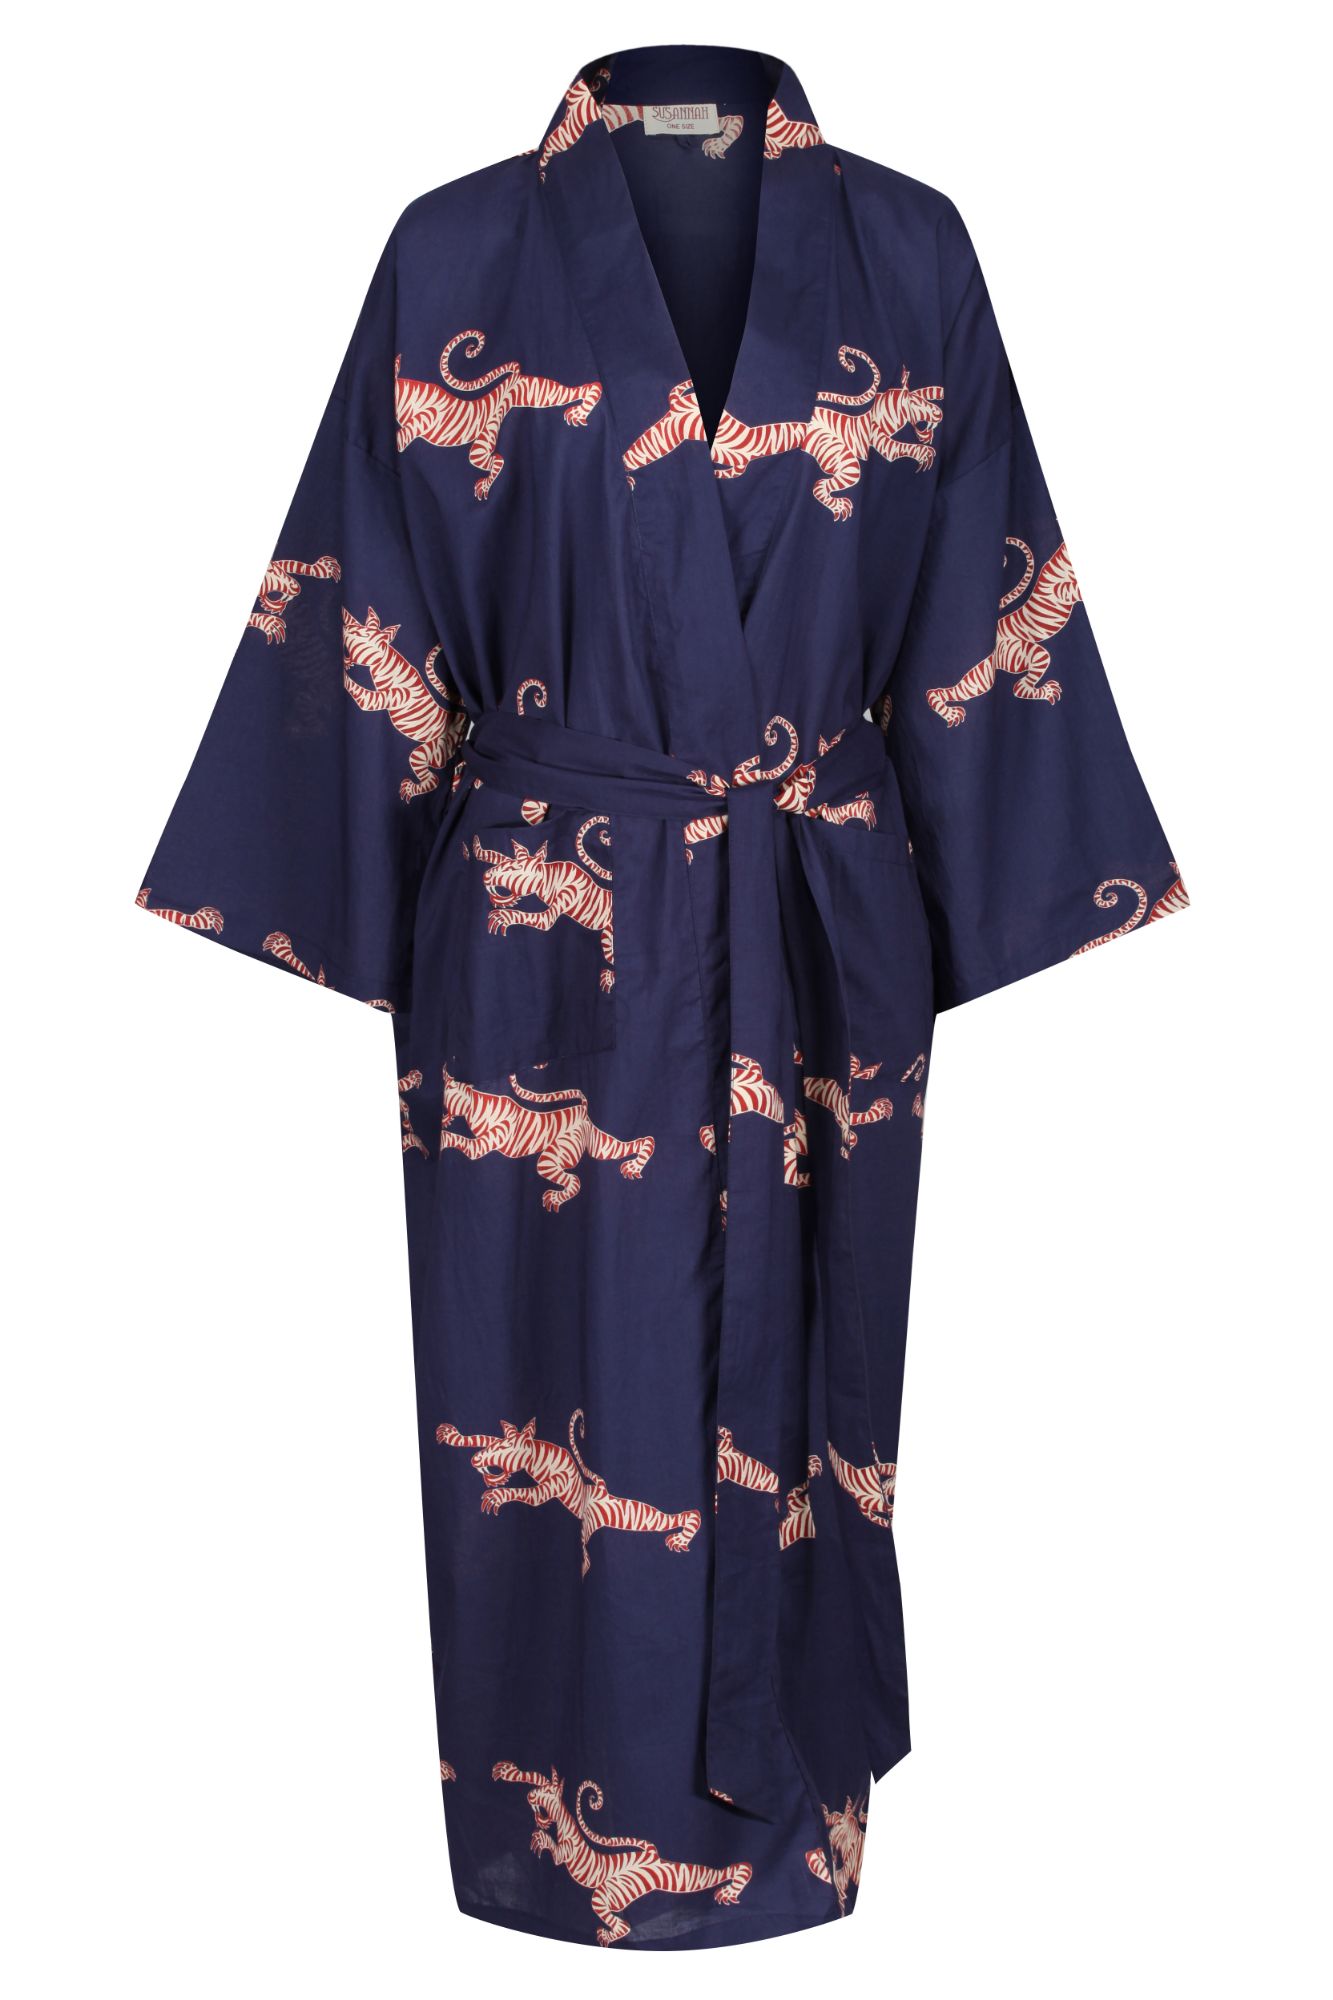 Susannah Cotton Women's Cotton Kimono Robe: Fighting Tigers Red & Cream on Dark Blue